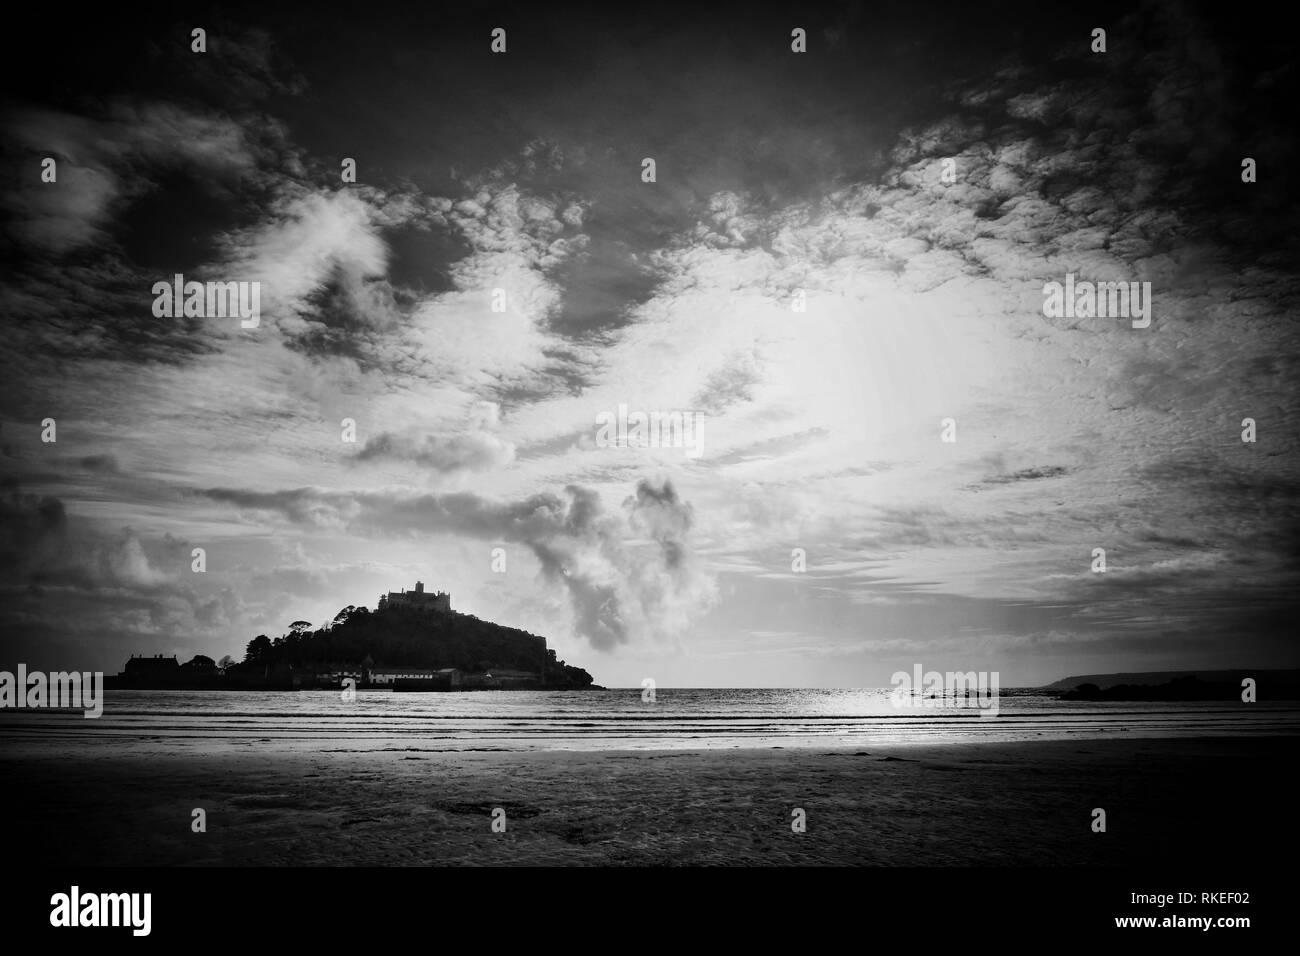 Black and white image of St. Michael's Mount, Cornwall, UK - John Gollop Stock Photo